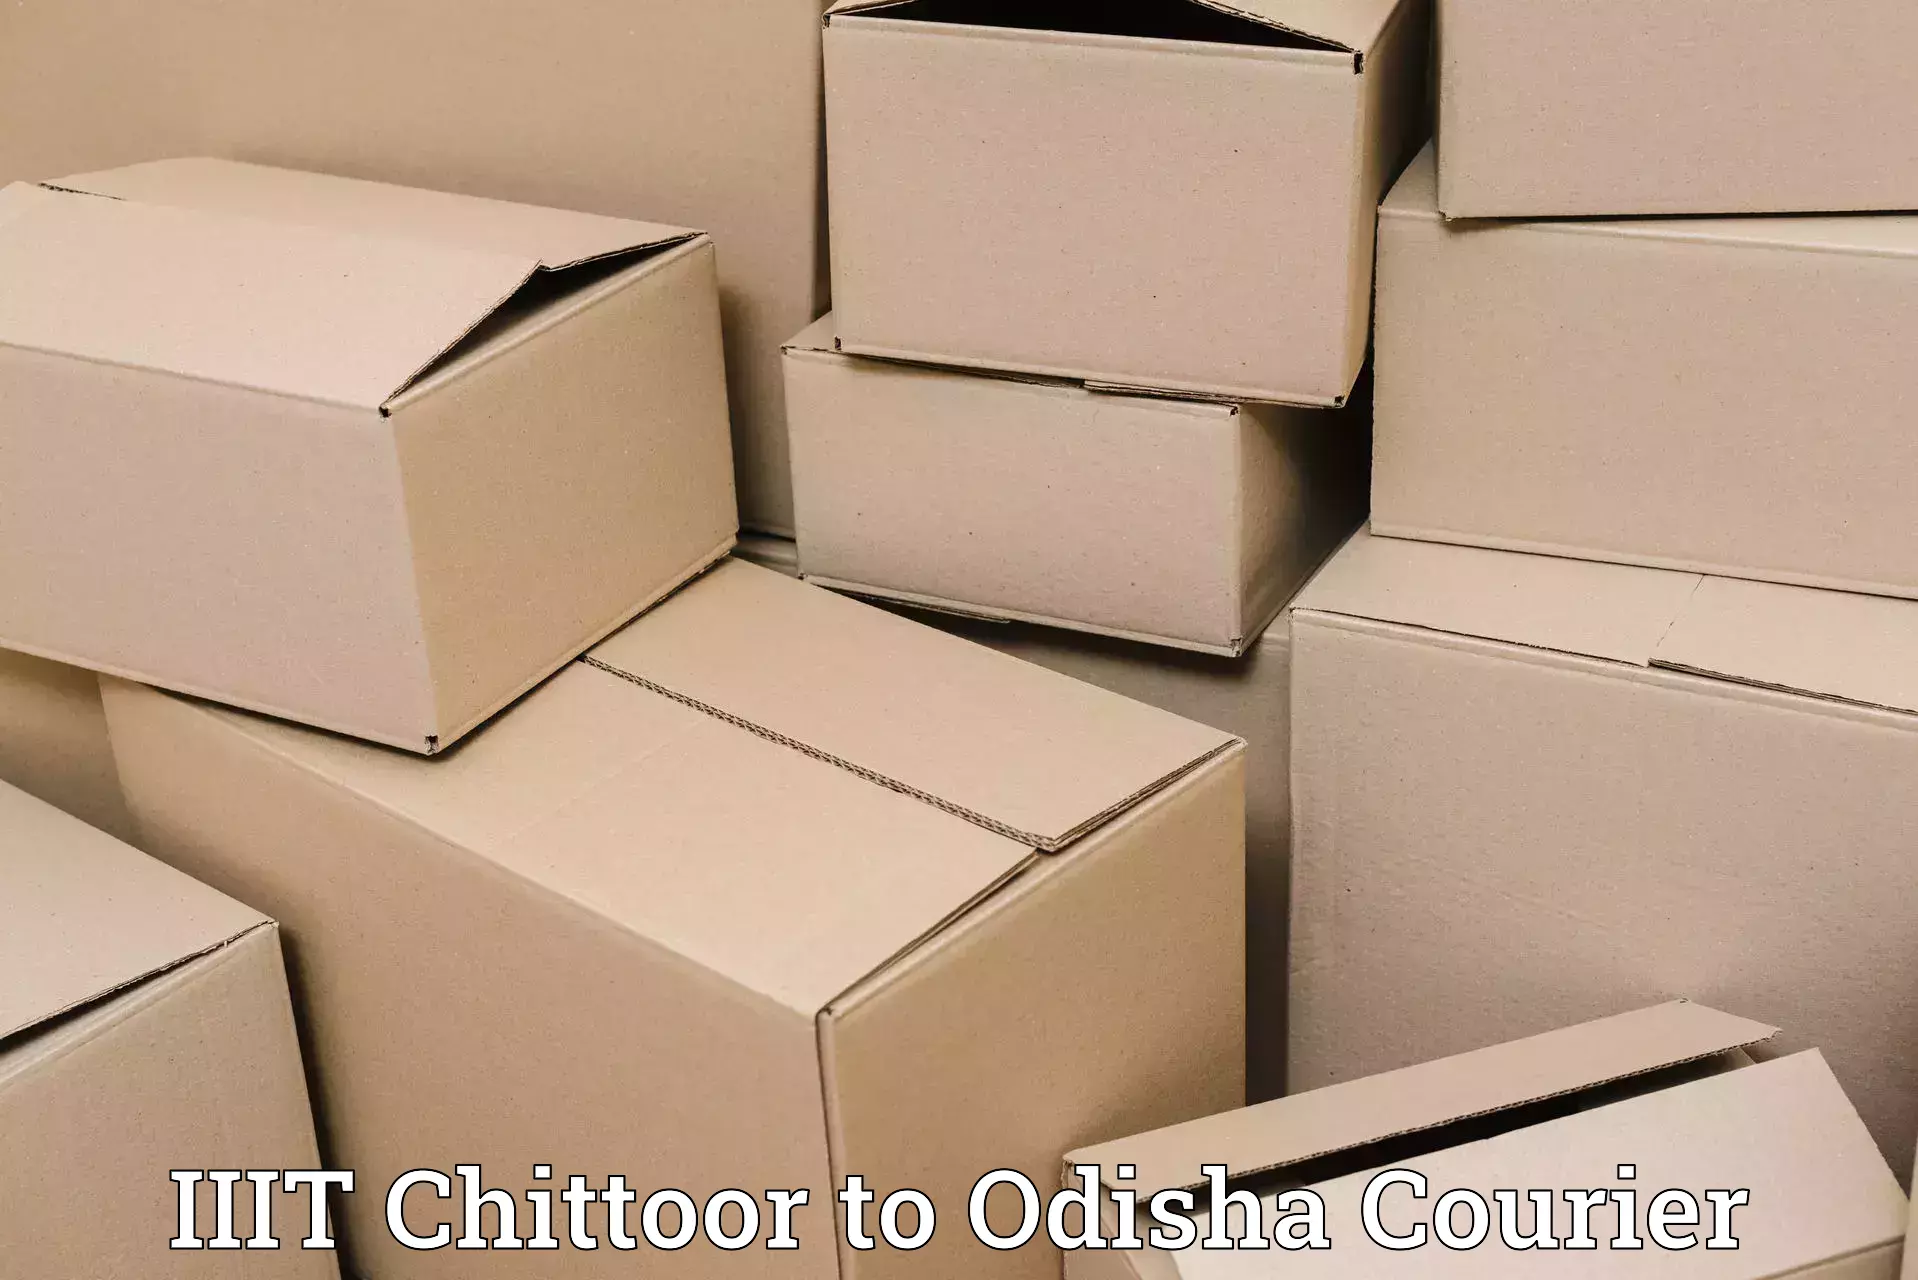 Global shipping networks in IIIT Chittoor to Sankerko